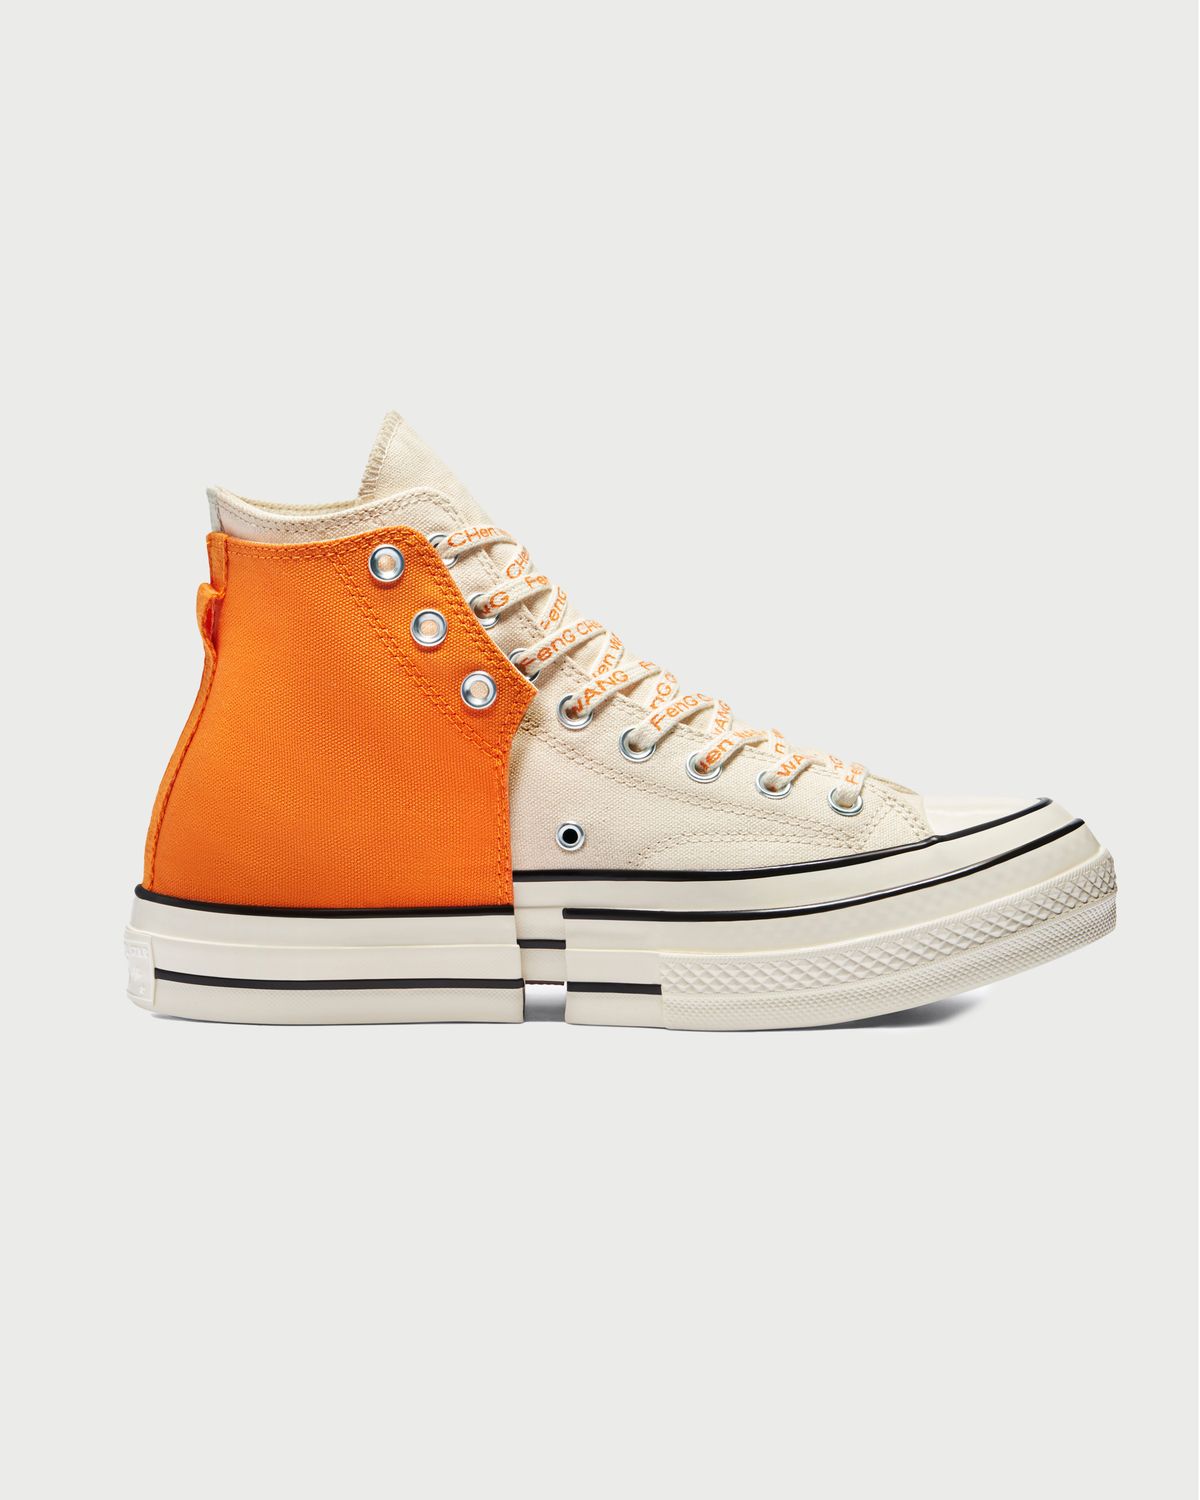 Converse x Feng Chen Wang – 2-in-1 Chuck 70 High Persimmon Orange - High Top Sneakers - Orange - Image 1